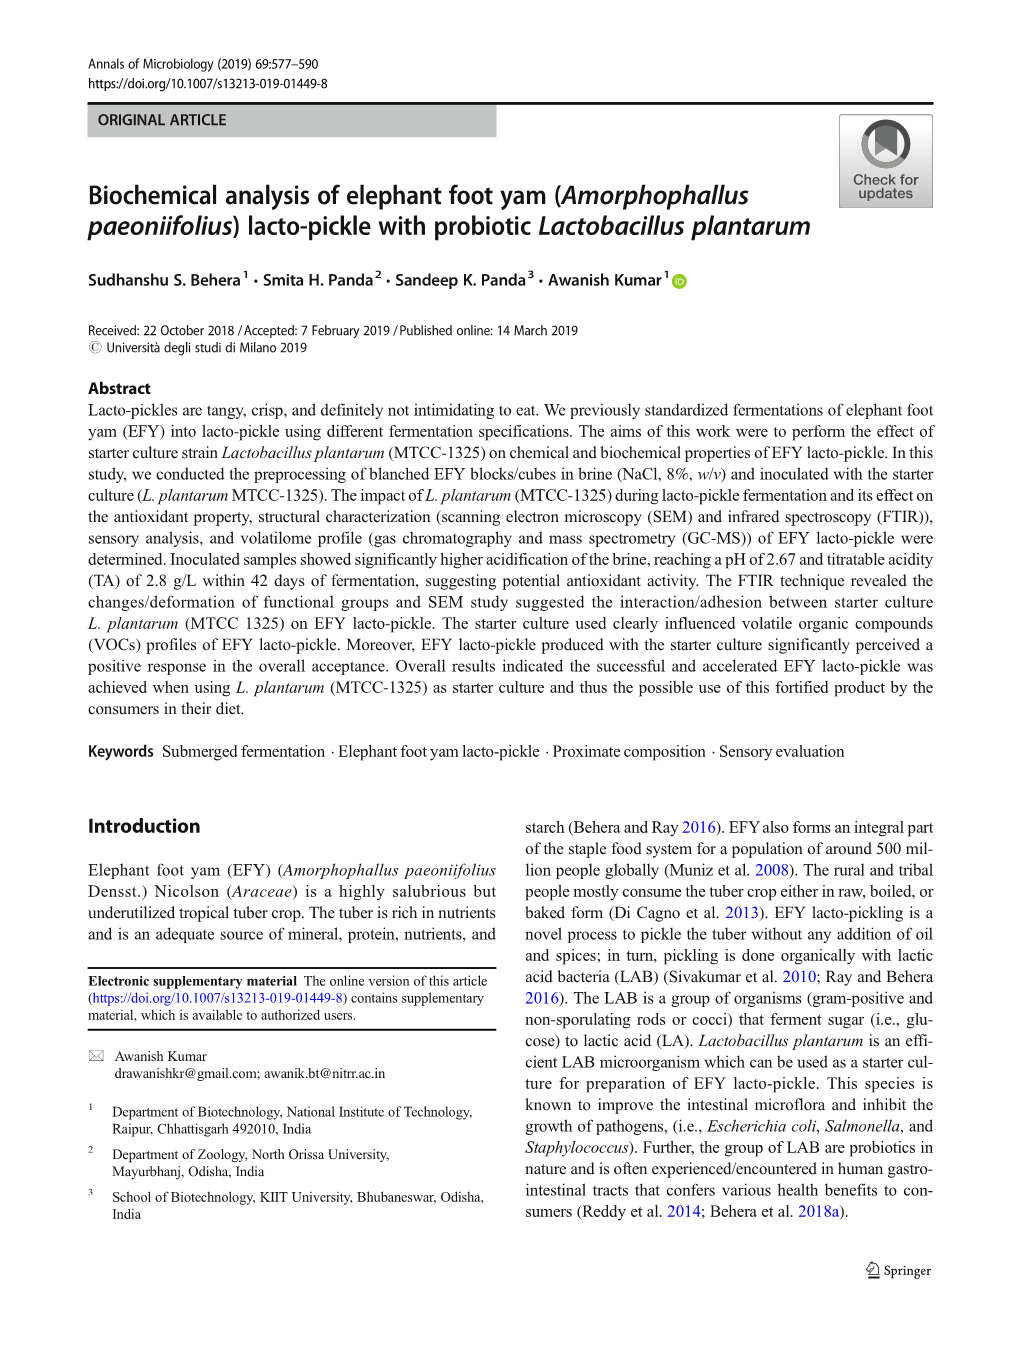 Biochemical Analysis of Elephant Foot Yam (Amorphophallus Paeoniifolius) Lacto-Pickle with Probiotic Lactobacillus Plantarum